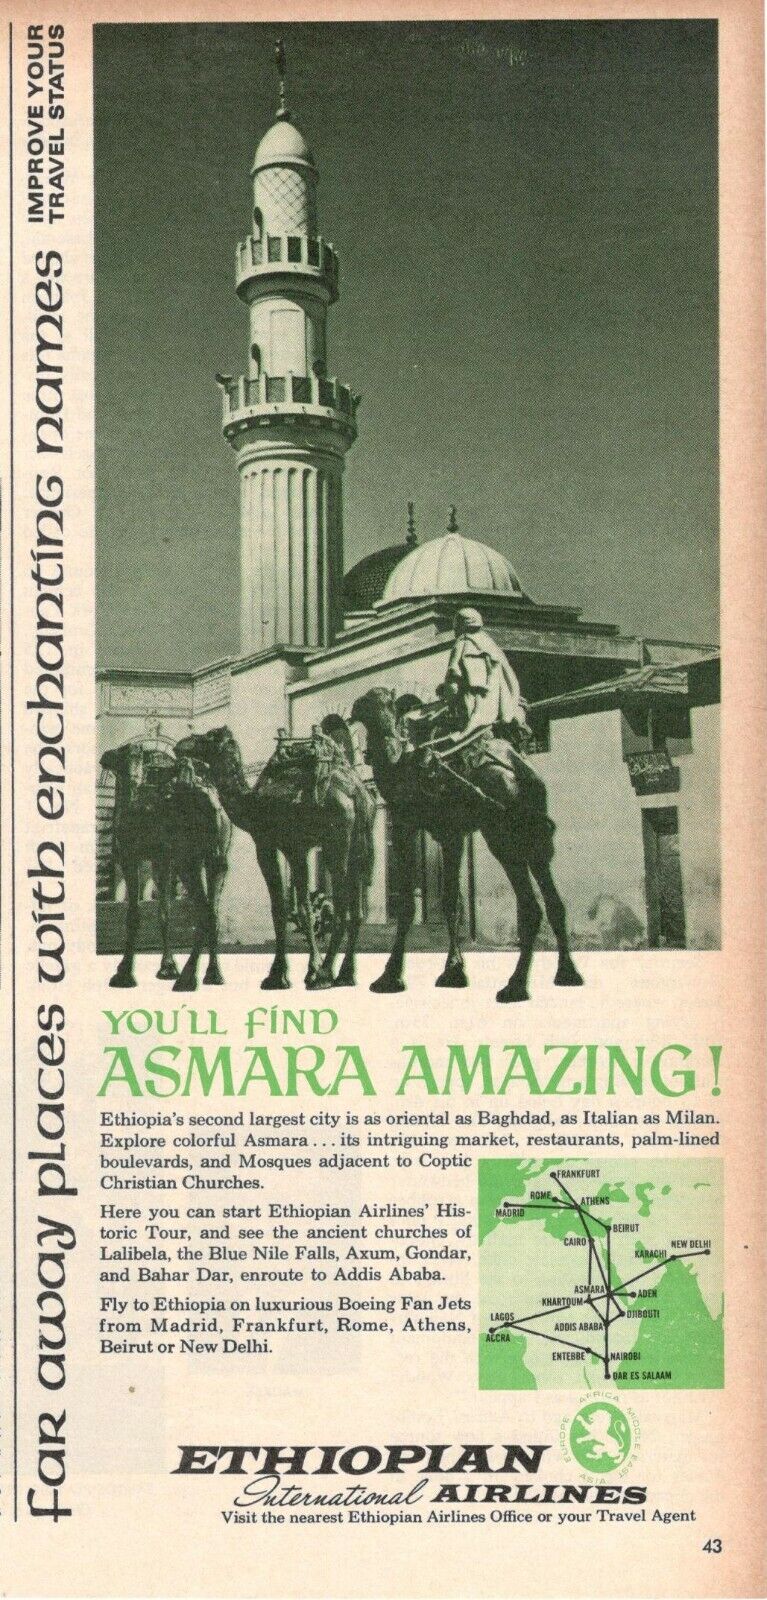 Ethiopian Airlines 1967 1 Page Advertising\' Vintage Asmara Amazing